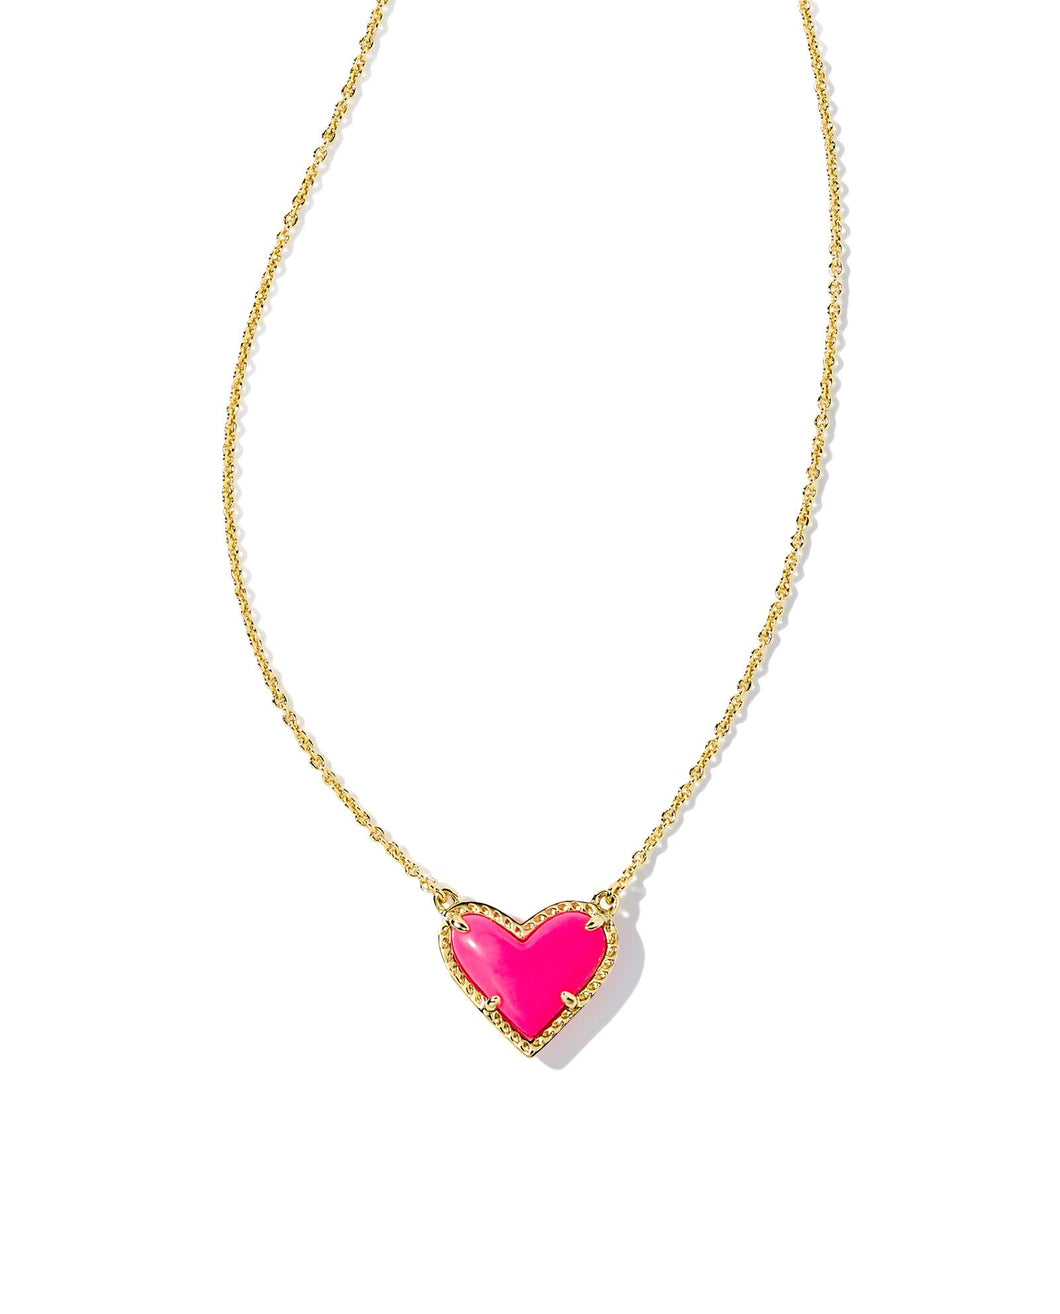 Kendra Scott Ari Heart Short Gold Pendant Necklace in Neon Pink